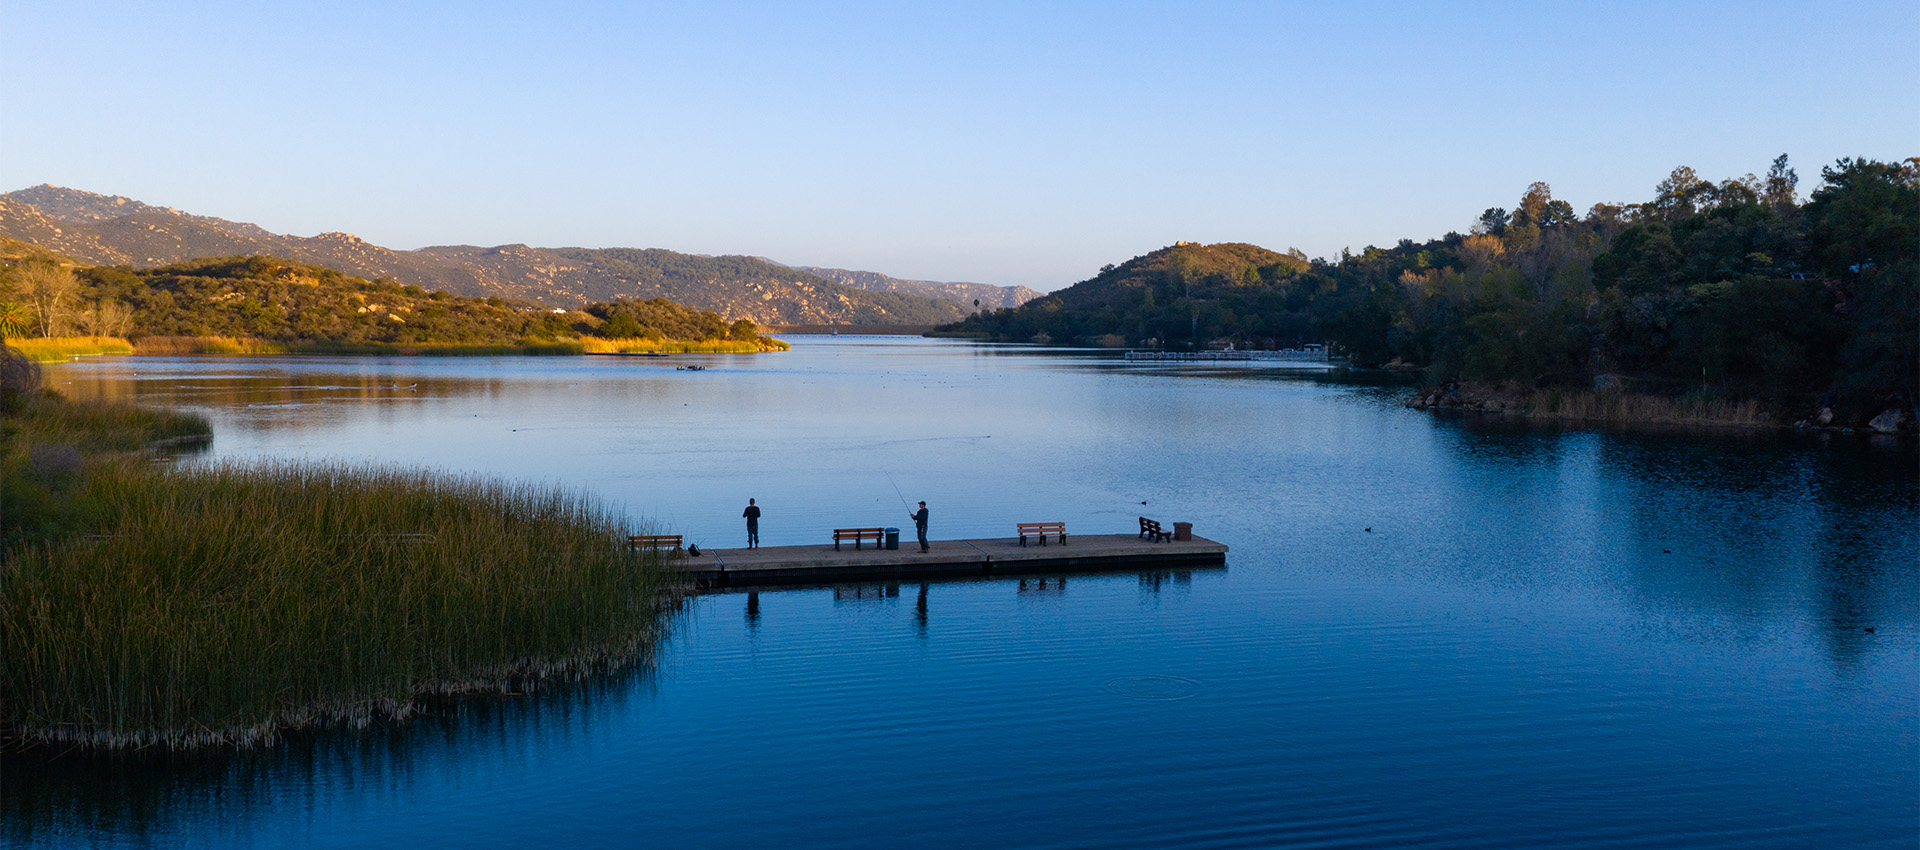 Dixon Reservoir, Escondido CA image